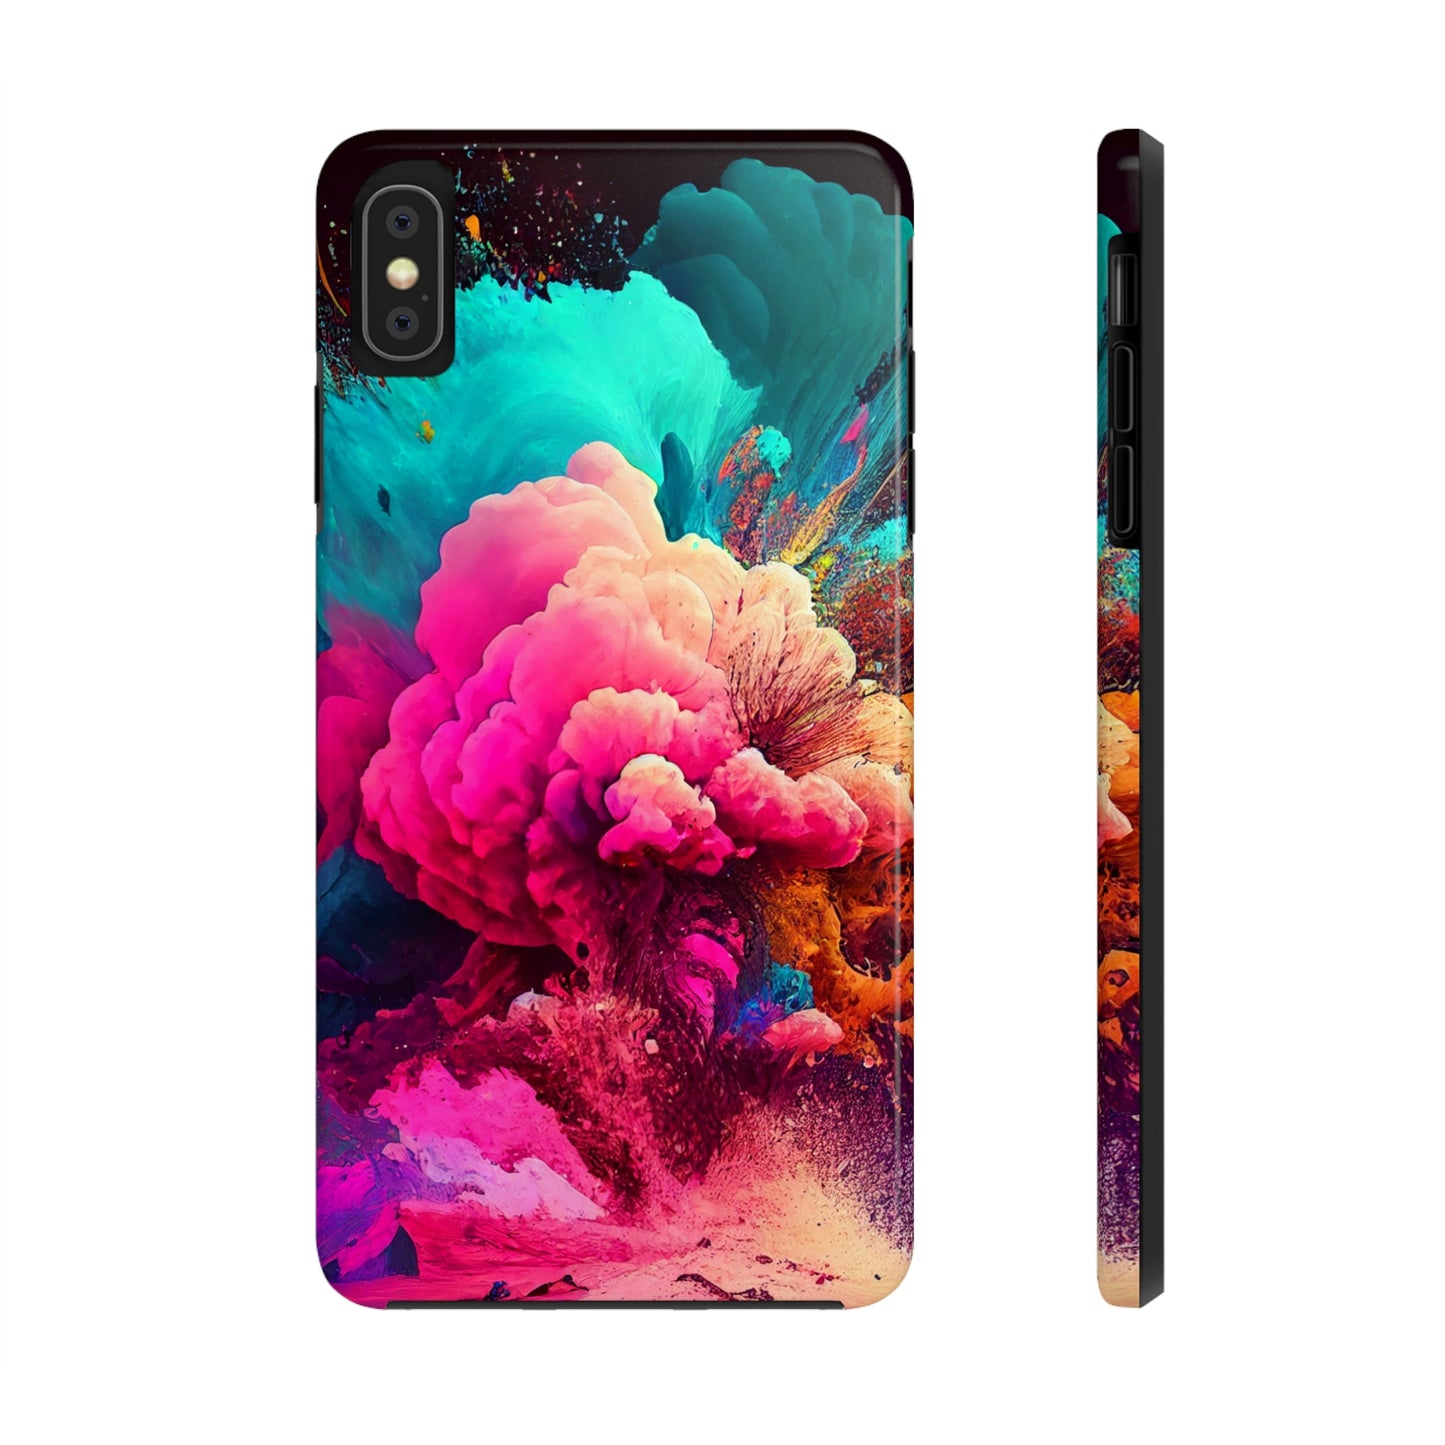 Exploding Colors Phone Case